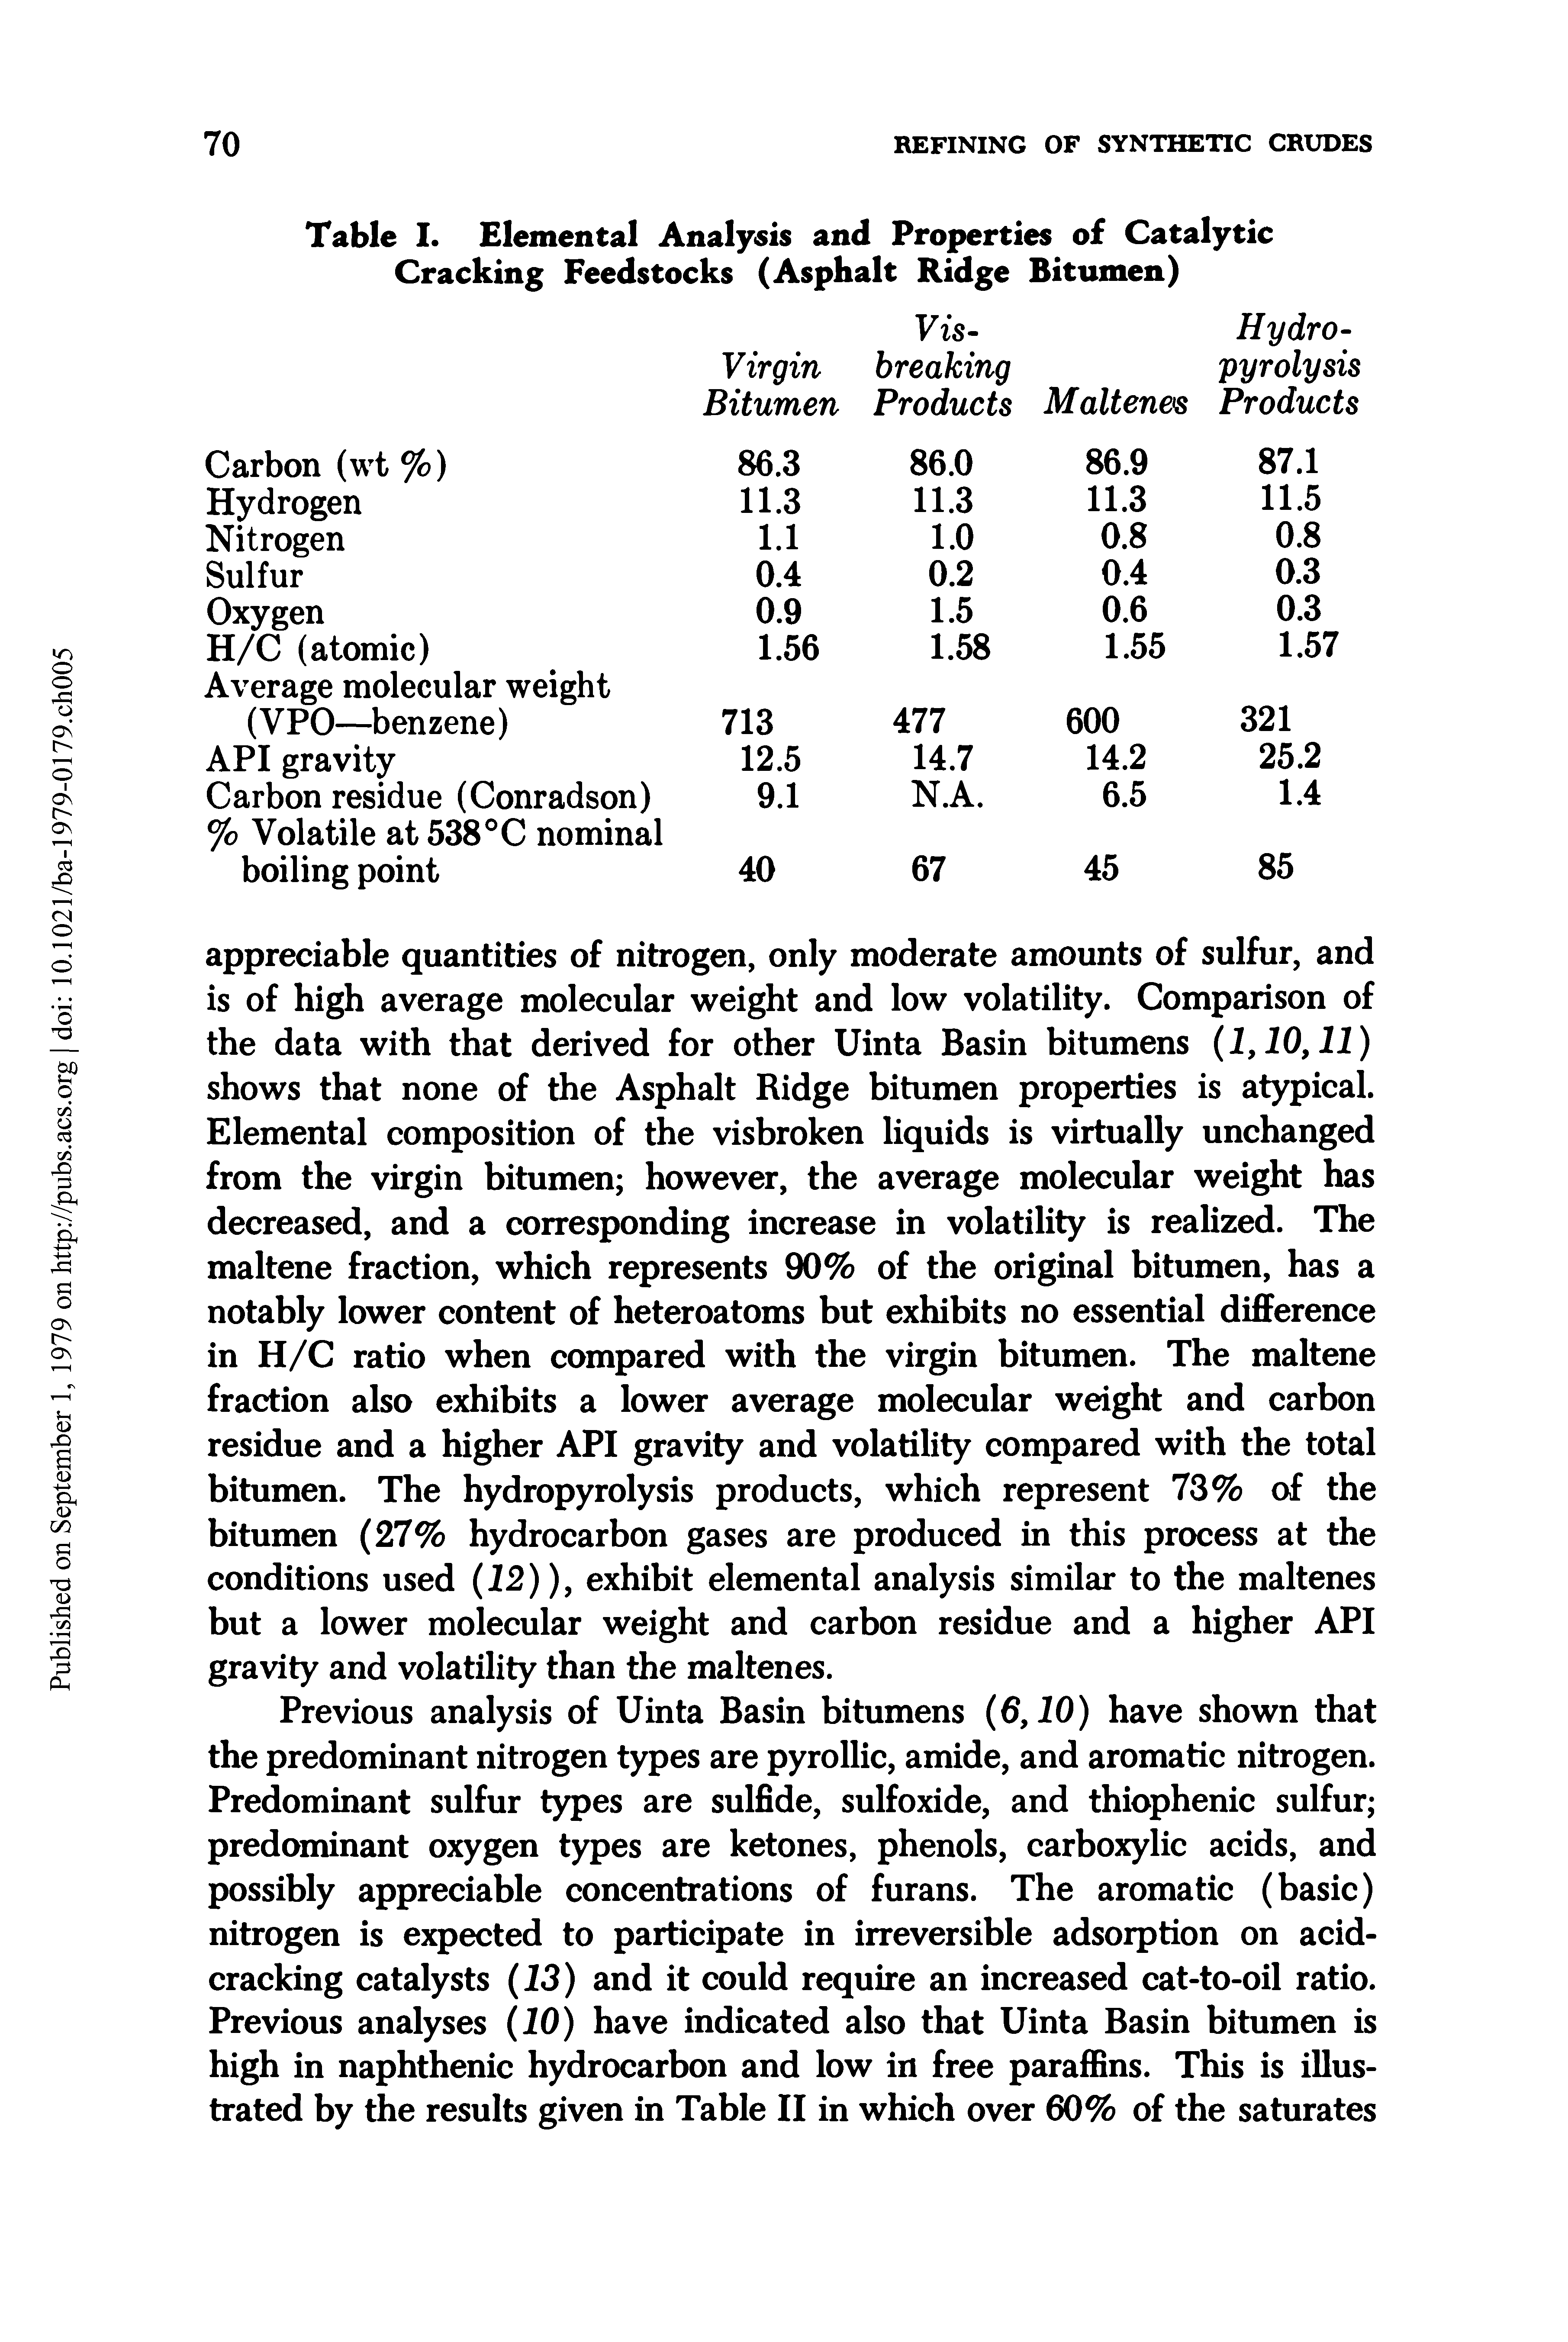 Table I. Elemental Analysis and Properties of Catalytic Cracking Feedstocks (Asphalt Ridge Bitumen)...